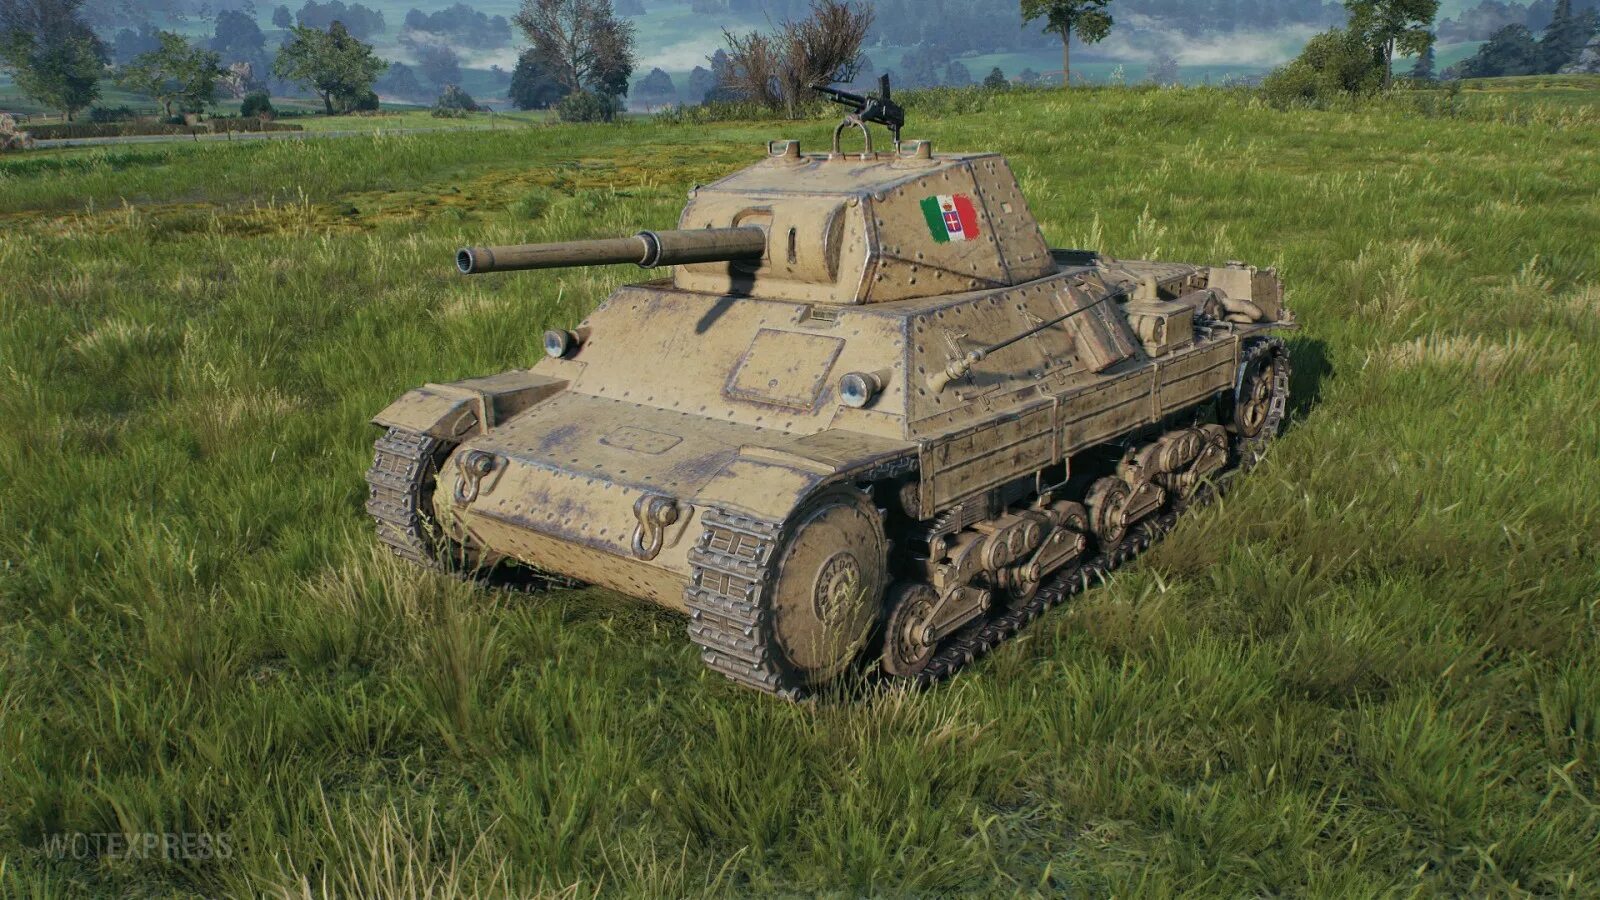 P wot. P26/40. Итальянский танк carro armato p26/40. P26 танк. P40 Leoncello.